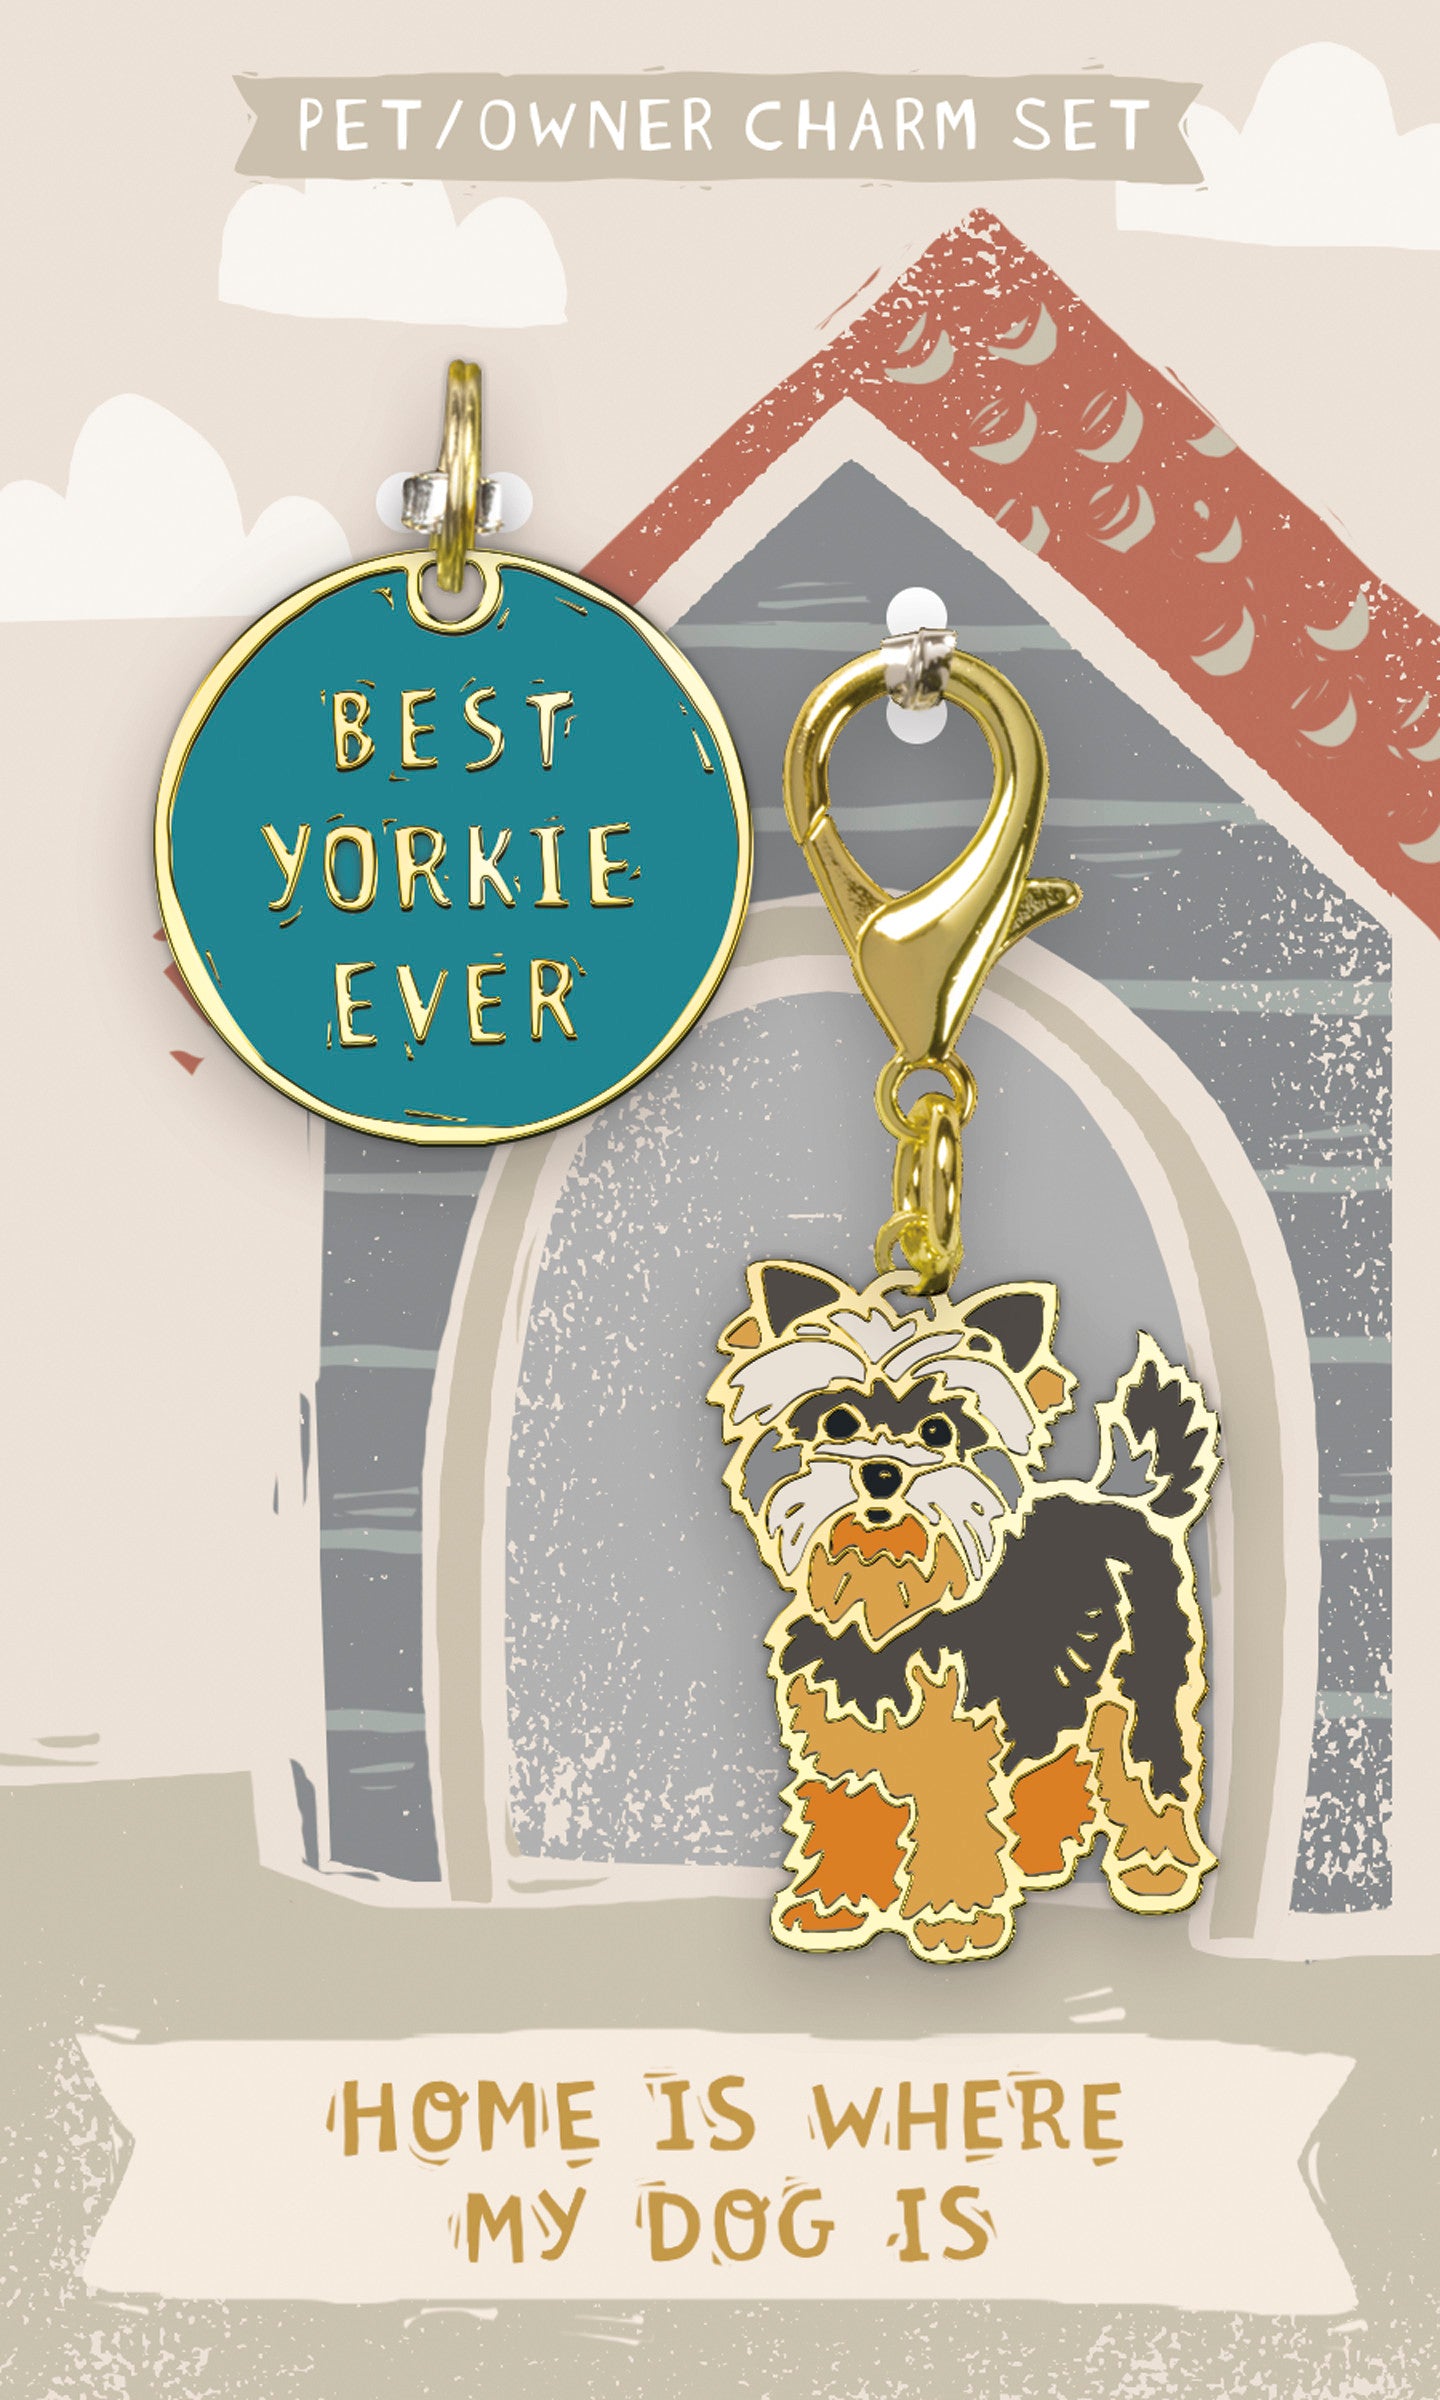 "Best Yorkie Ever" Charm Set - Owner keychain, pet charm